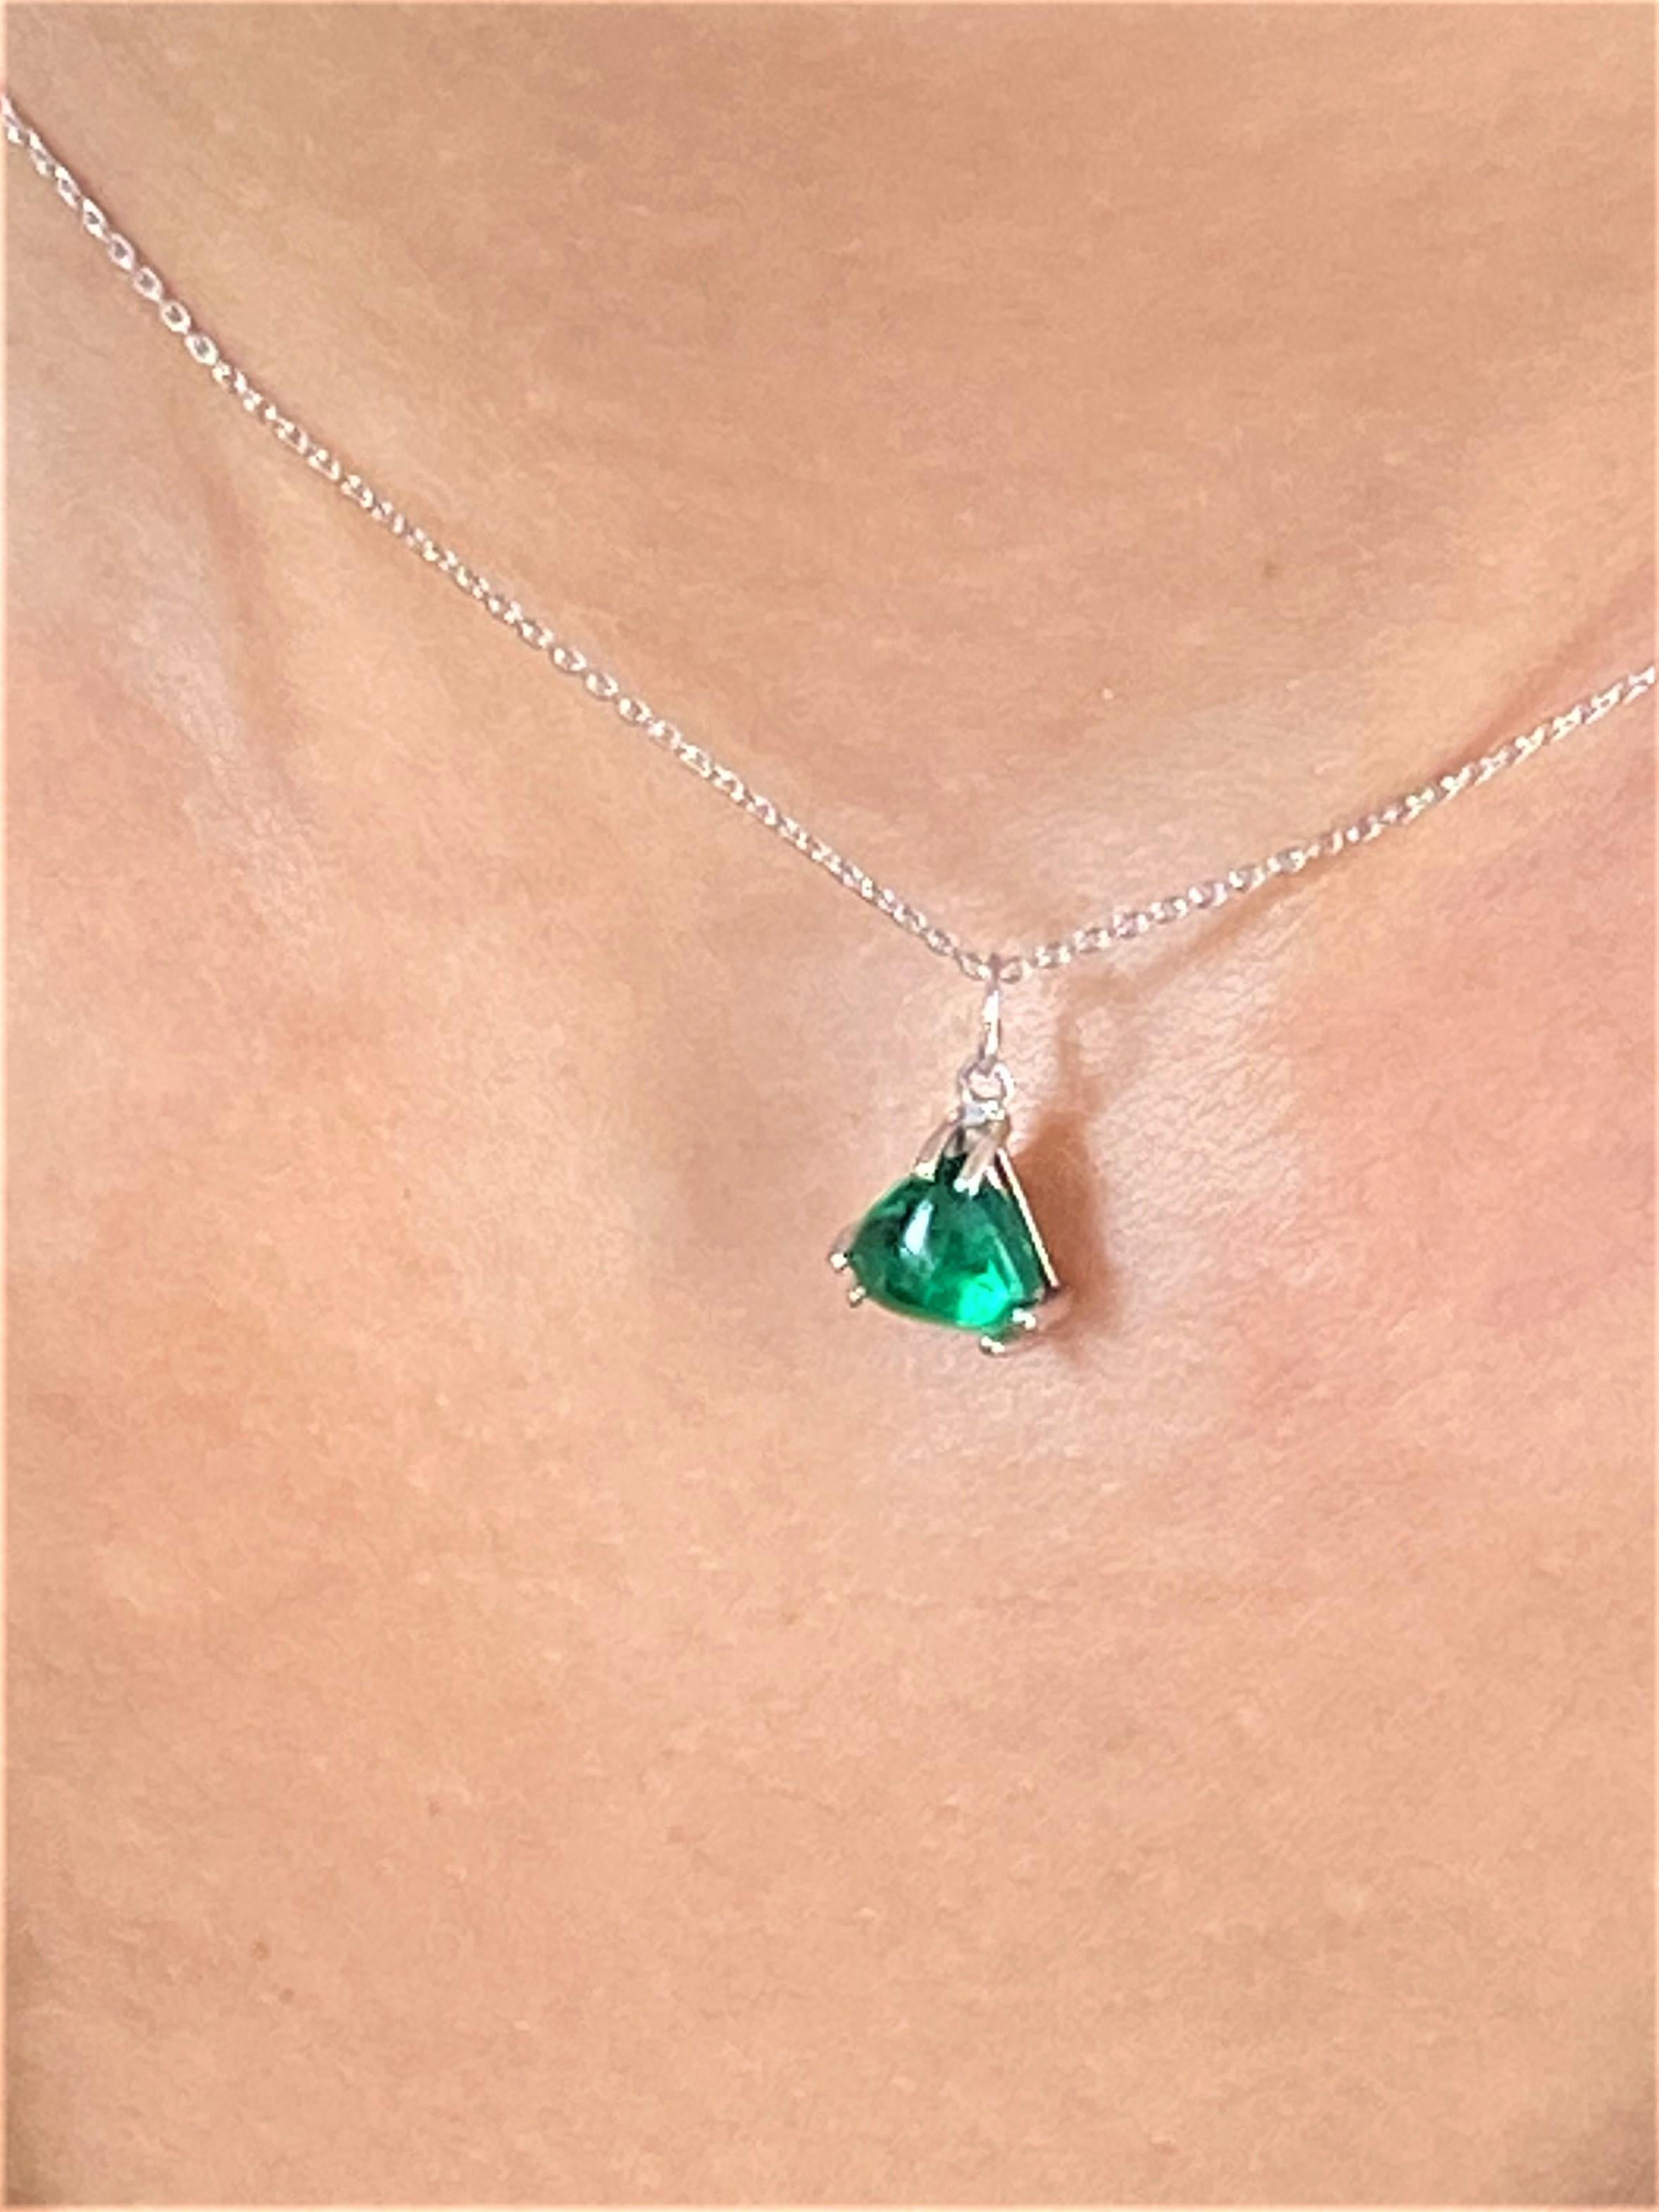 Trillion Cut Cabochon Trillion Shaped Natural Colombian Emerald White Gold Drop Necklace